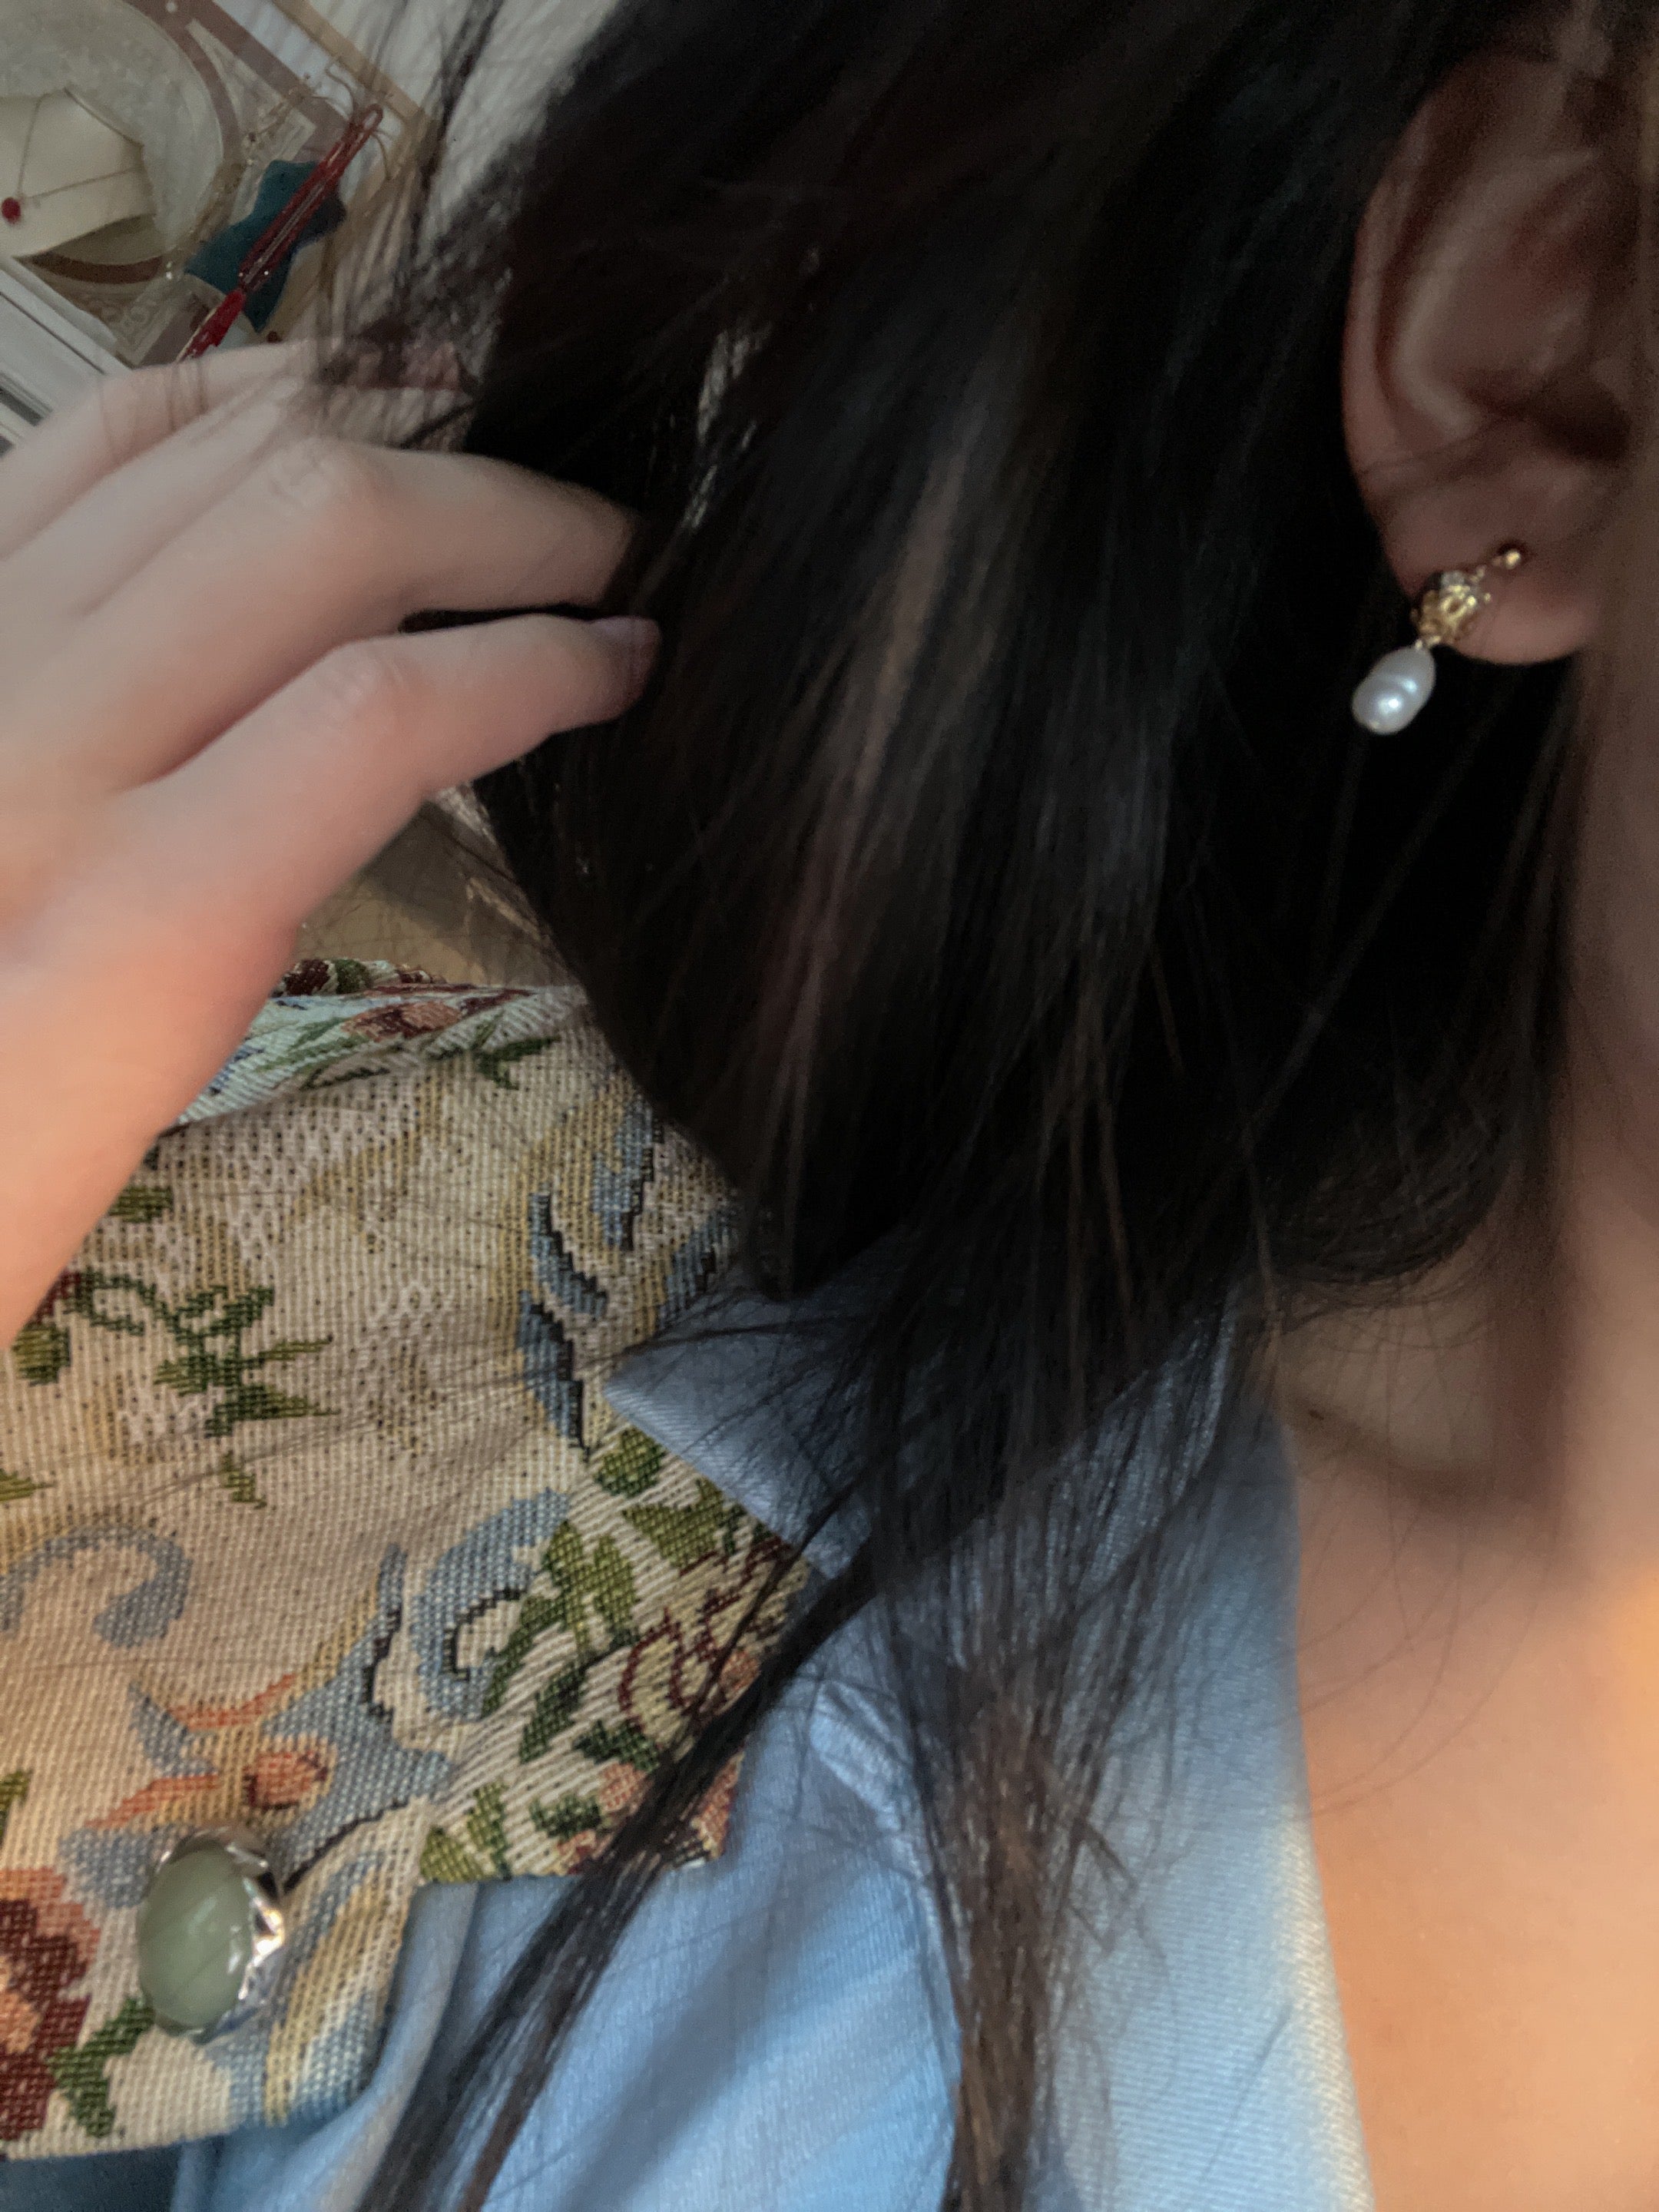 Influencer Program 14k Gold Vintage Natural Baroque Pearl Earrings